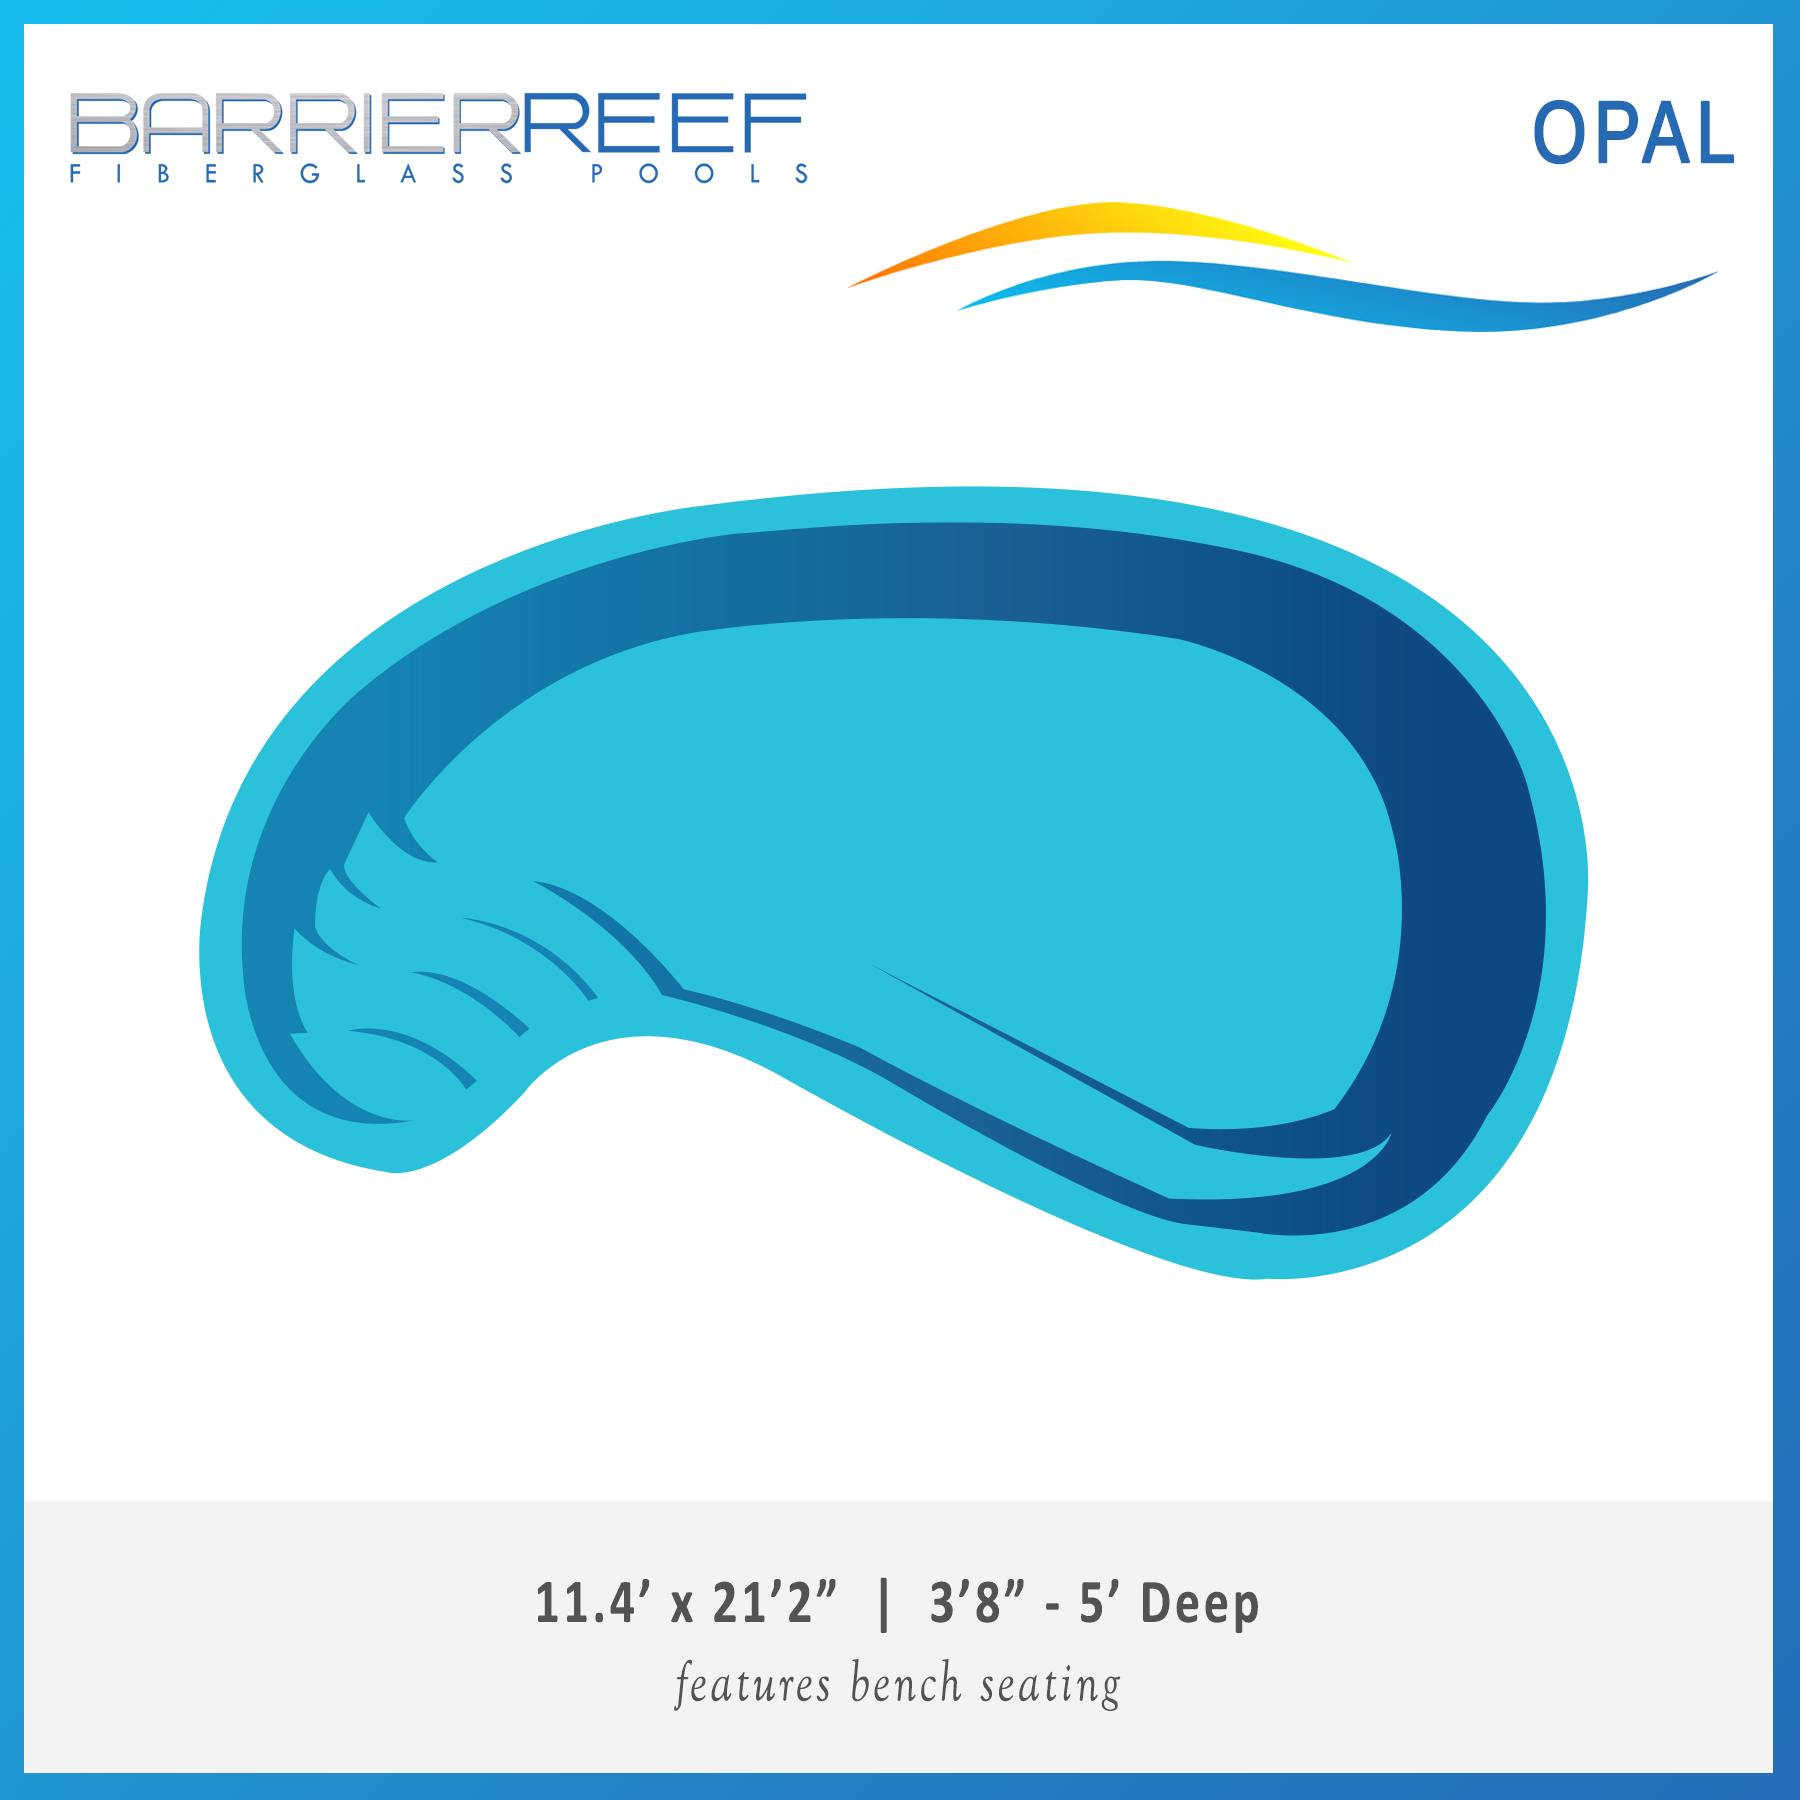 Opal Barrier Reef Fiberglass Pool